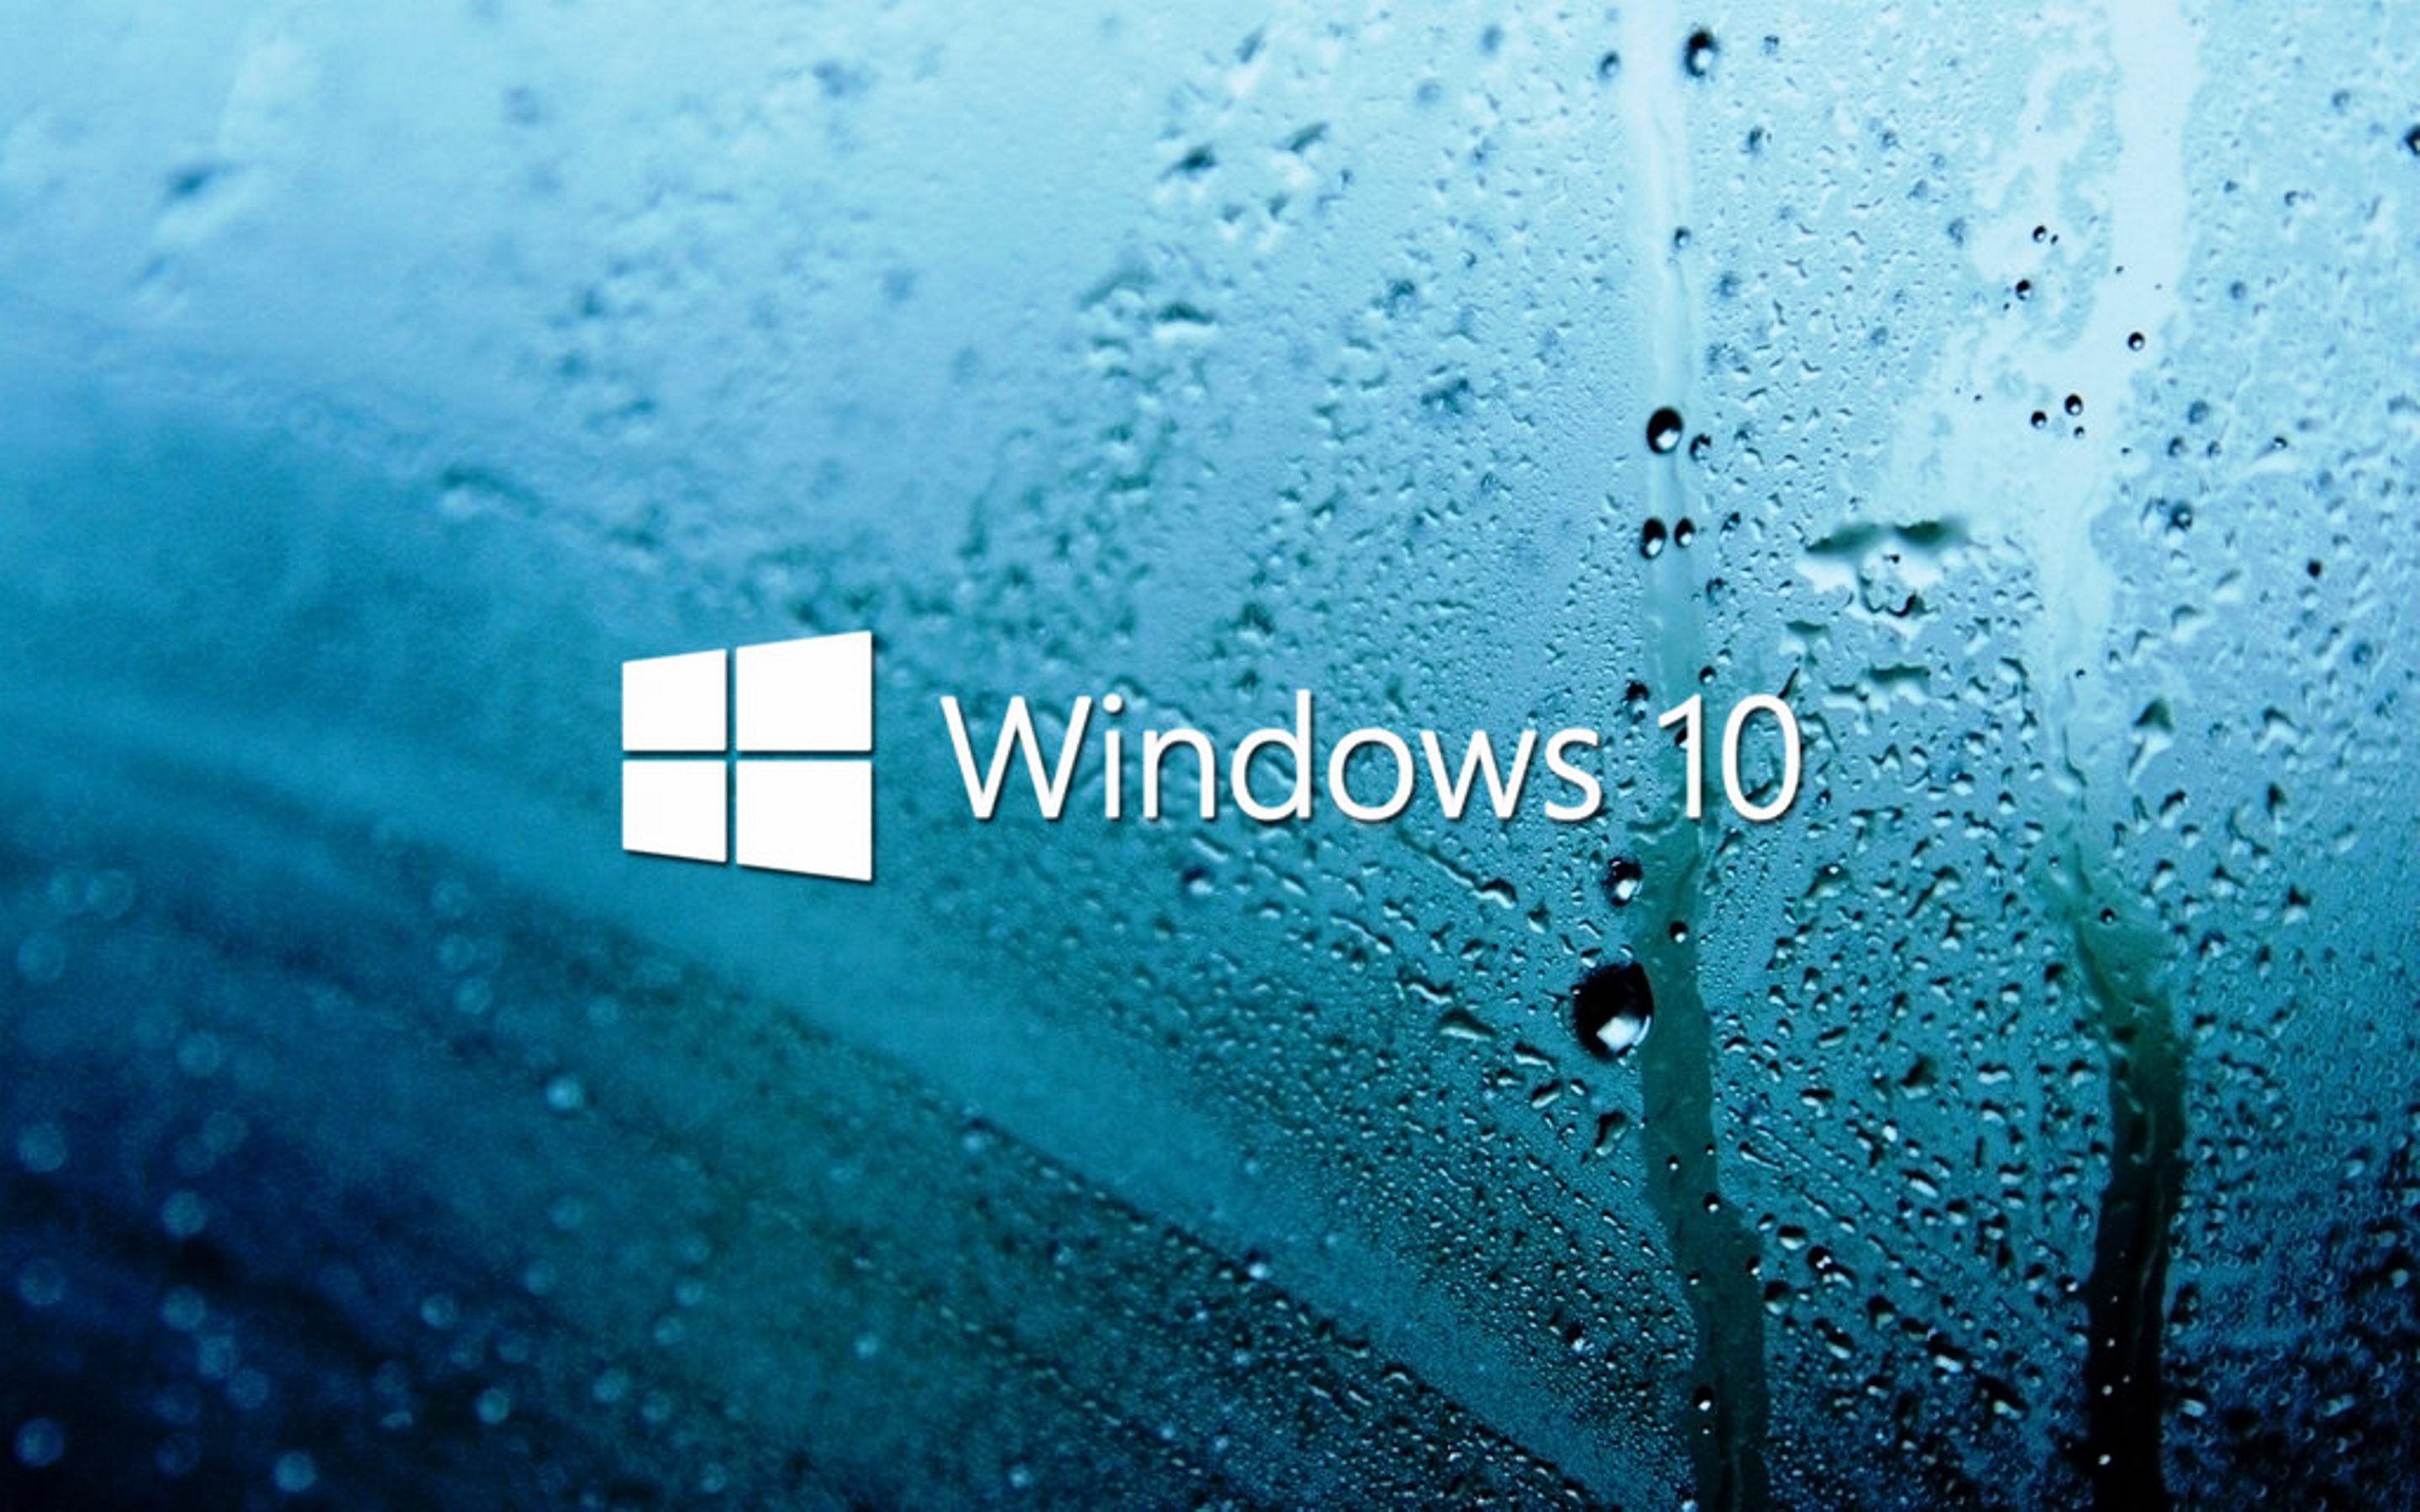 Stunning Windows 10 Wallpaper HD For Your Desktop